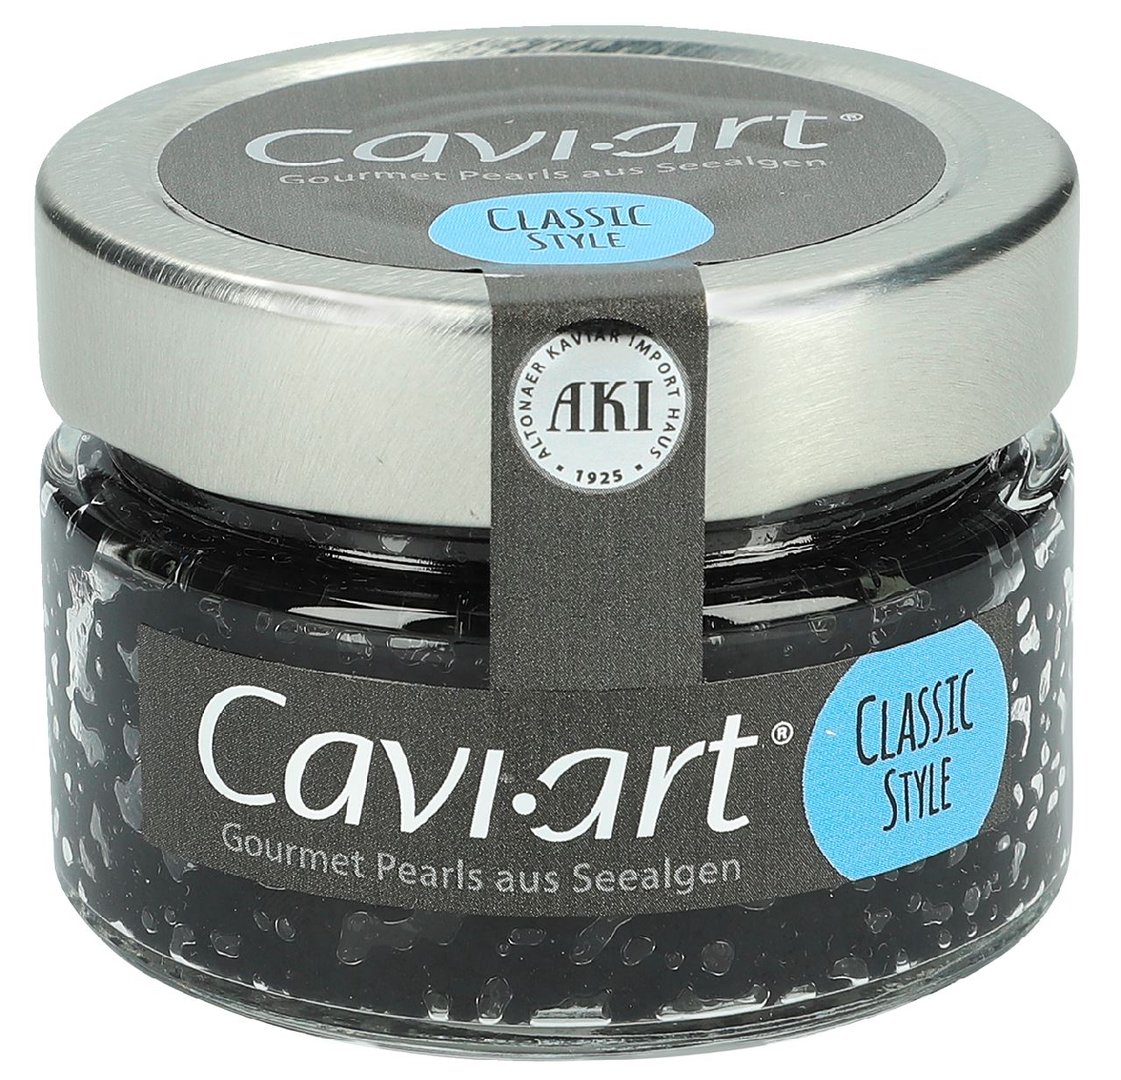 AKI - Cavi-Art Classic - 100 g Glas